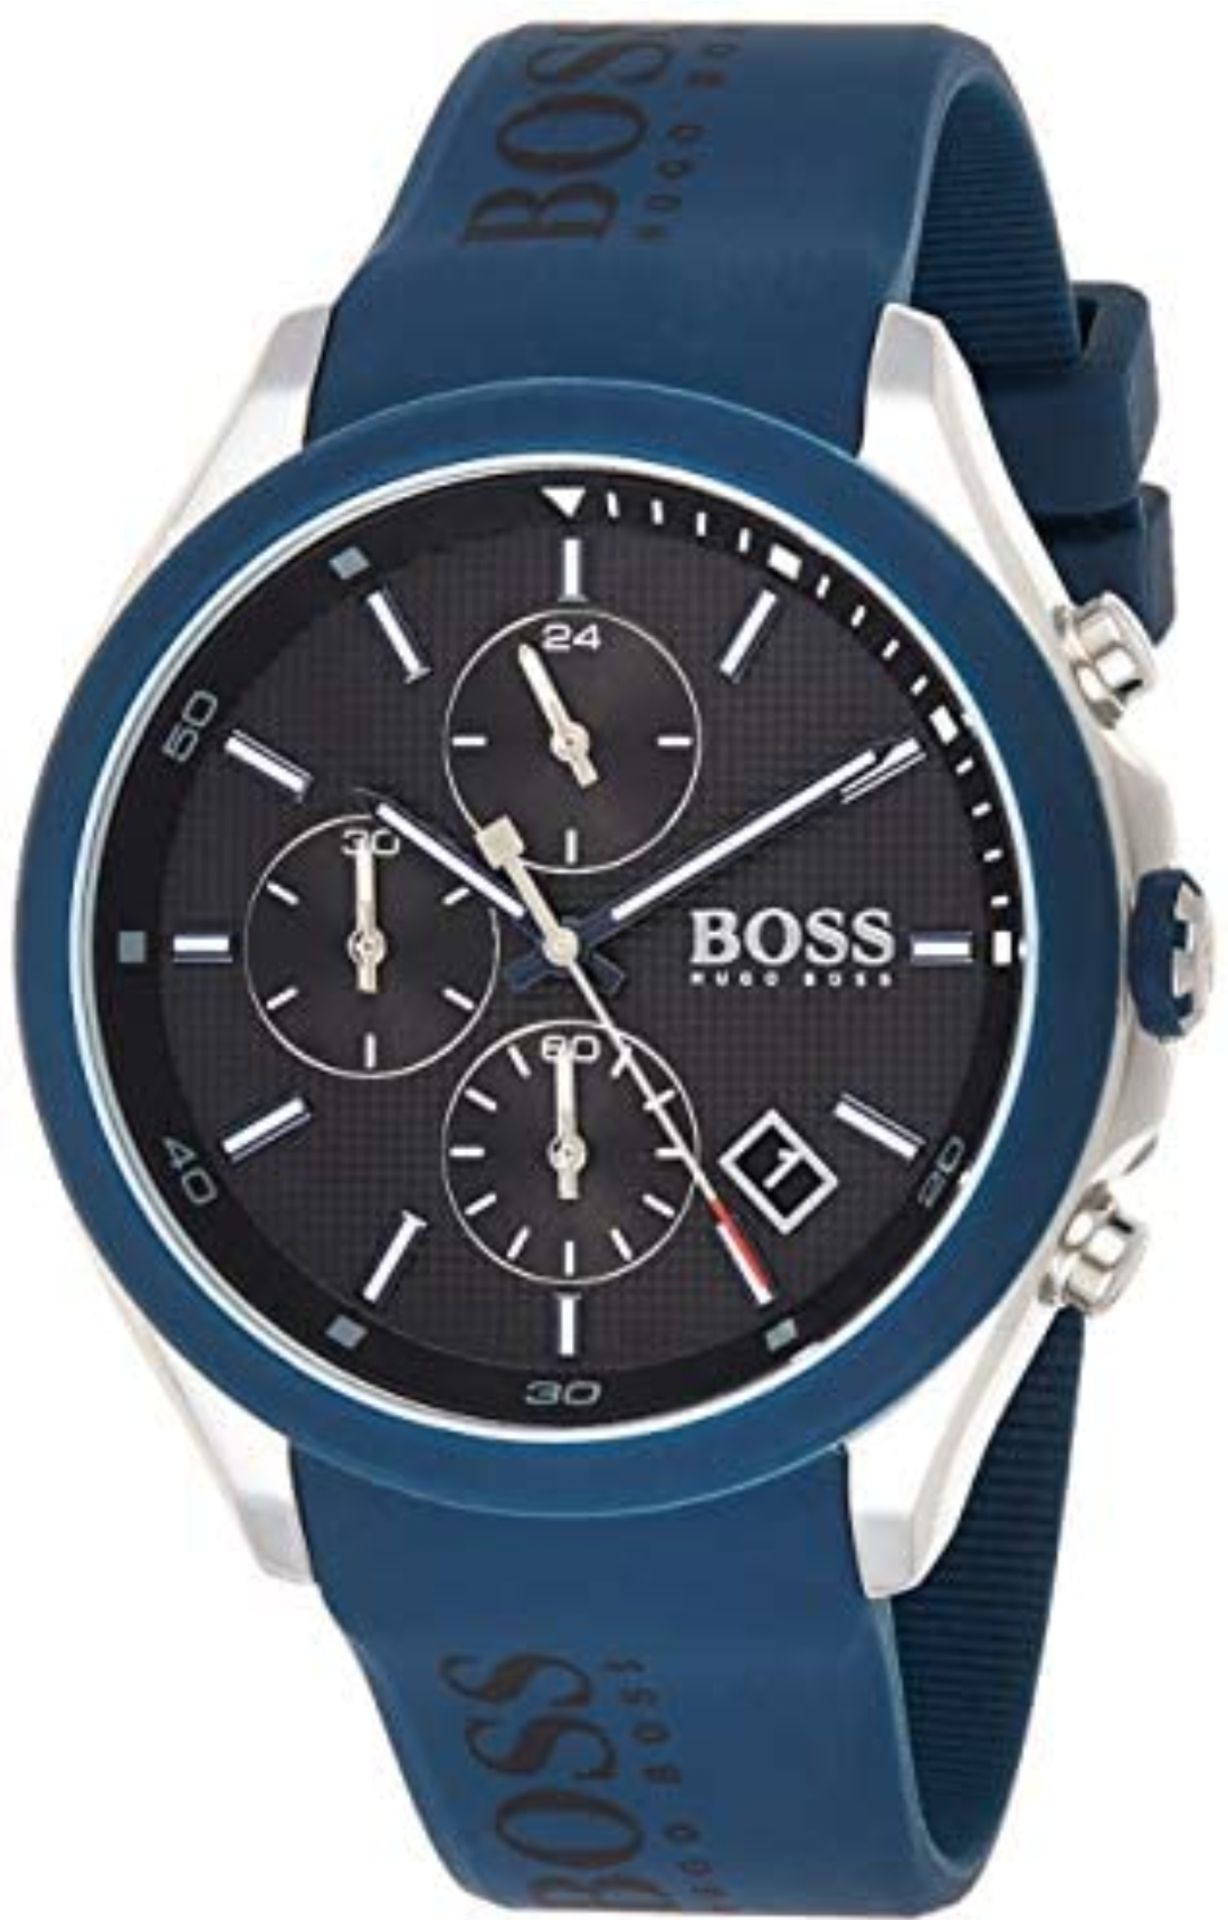 Hugo Boss 1513717 Men's Velocity Blue Rubber Strap Quartz Chronograph Watch - Image 7 of 11